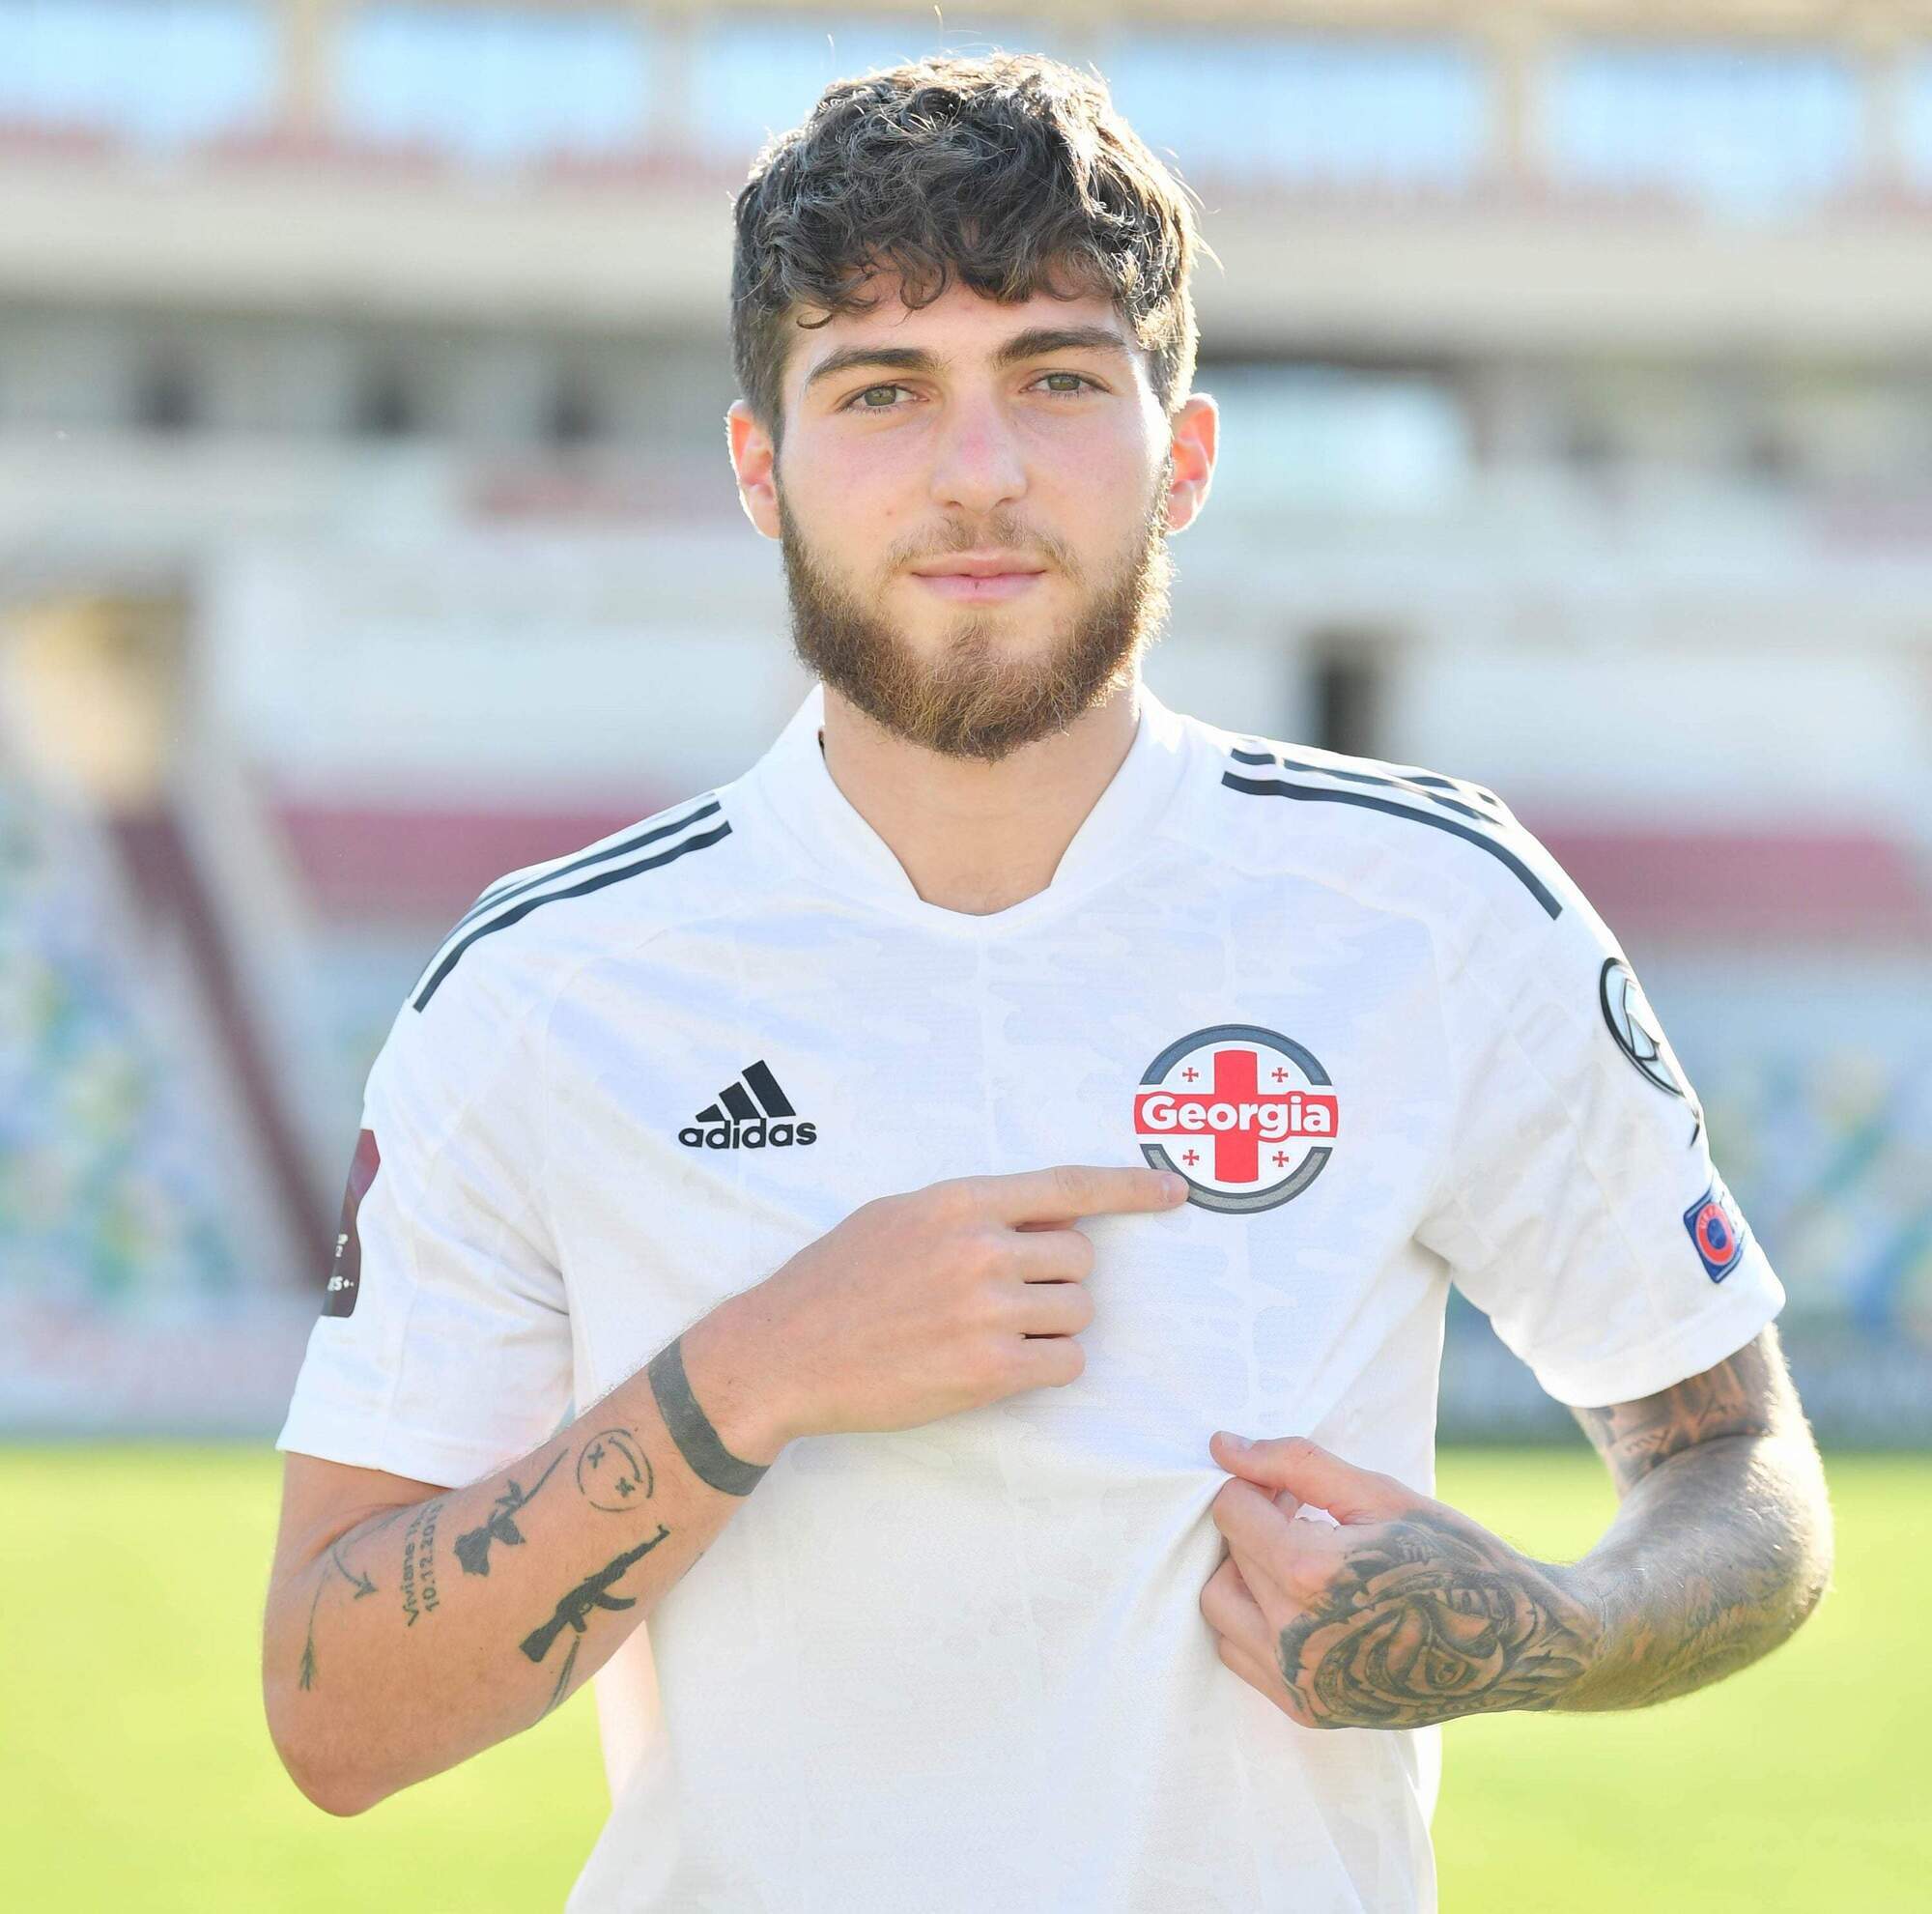 Tsitaishvili plays for Georgia